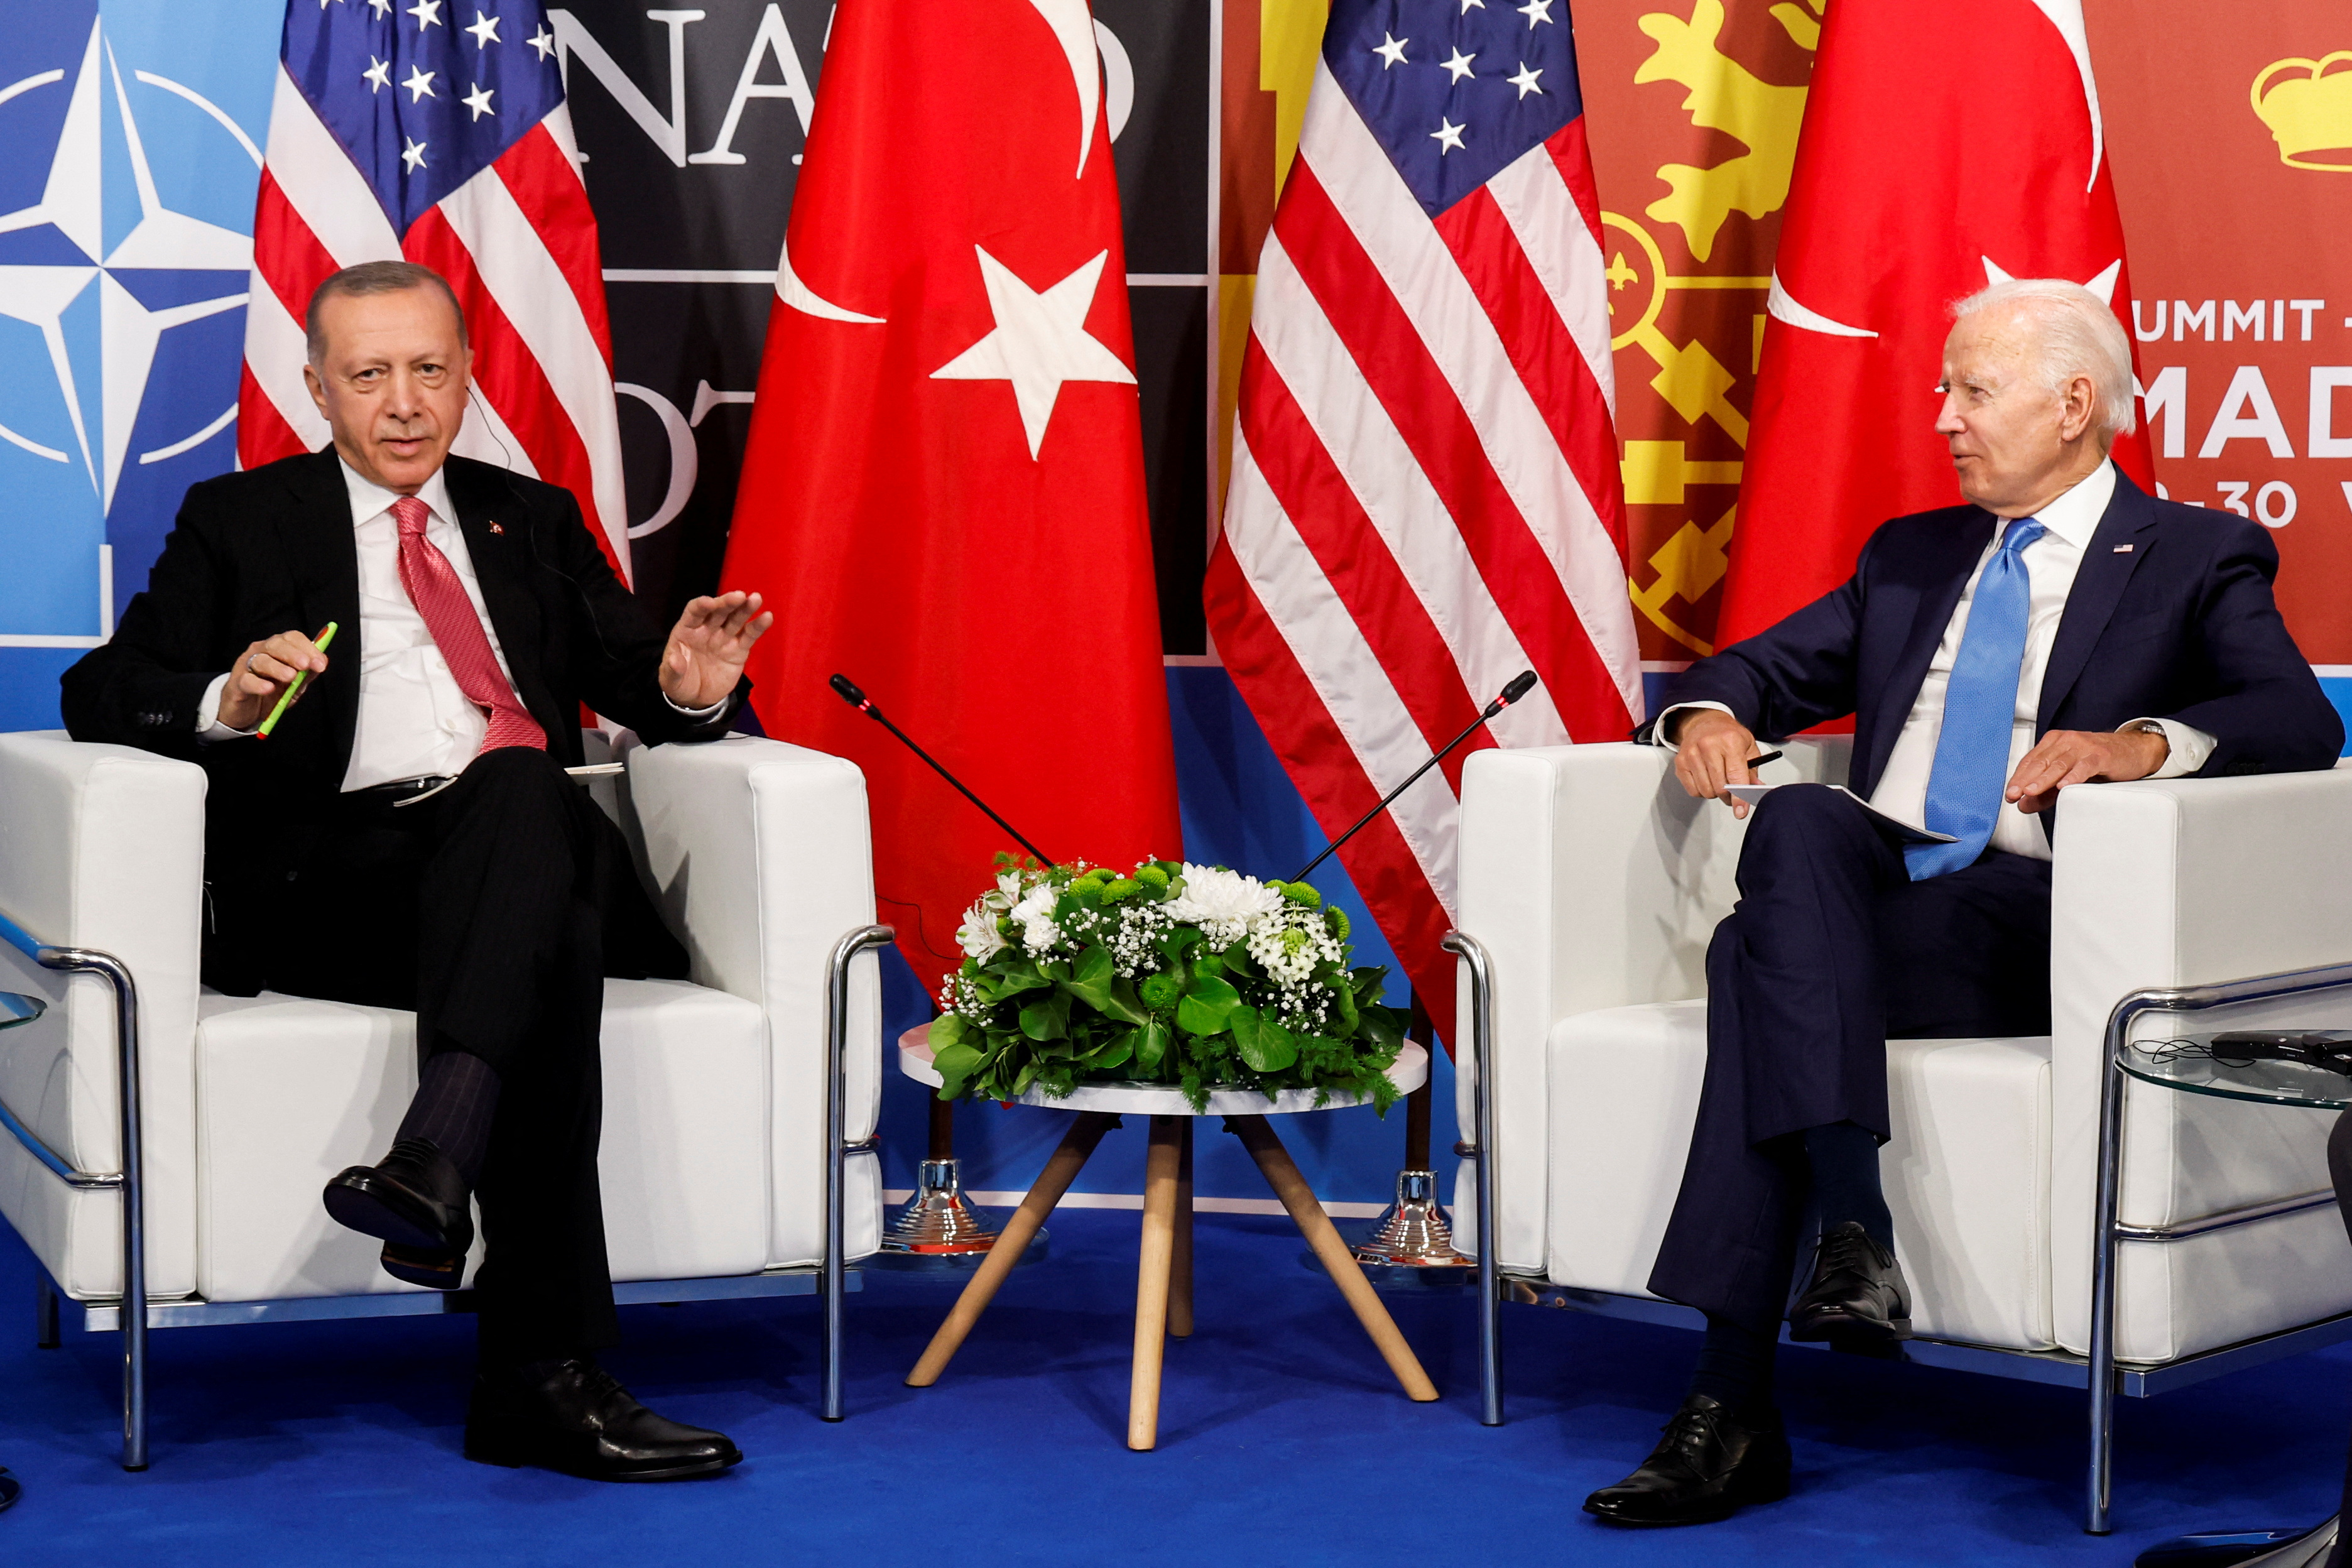 U.S. President Joe Biden meeting with Turkish President Recep Tayyip Erdogan during the NATO summit in Madrid, Spain June 29, 2022. Photo: REUTERS